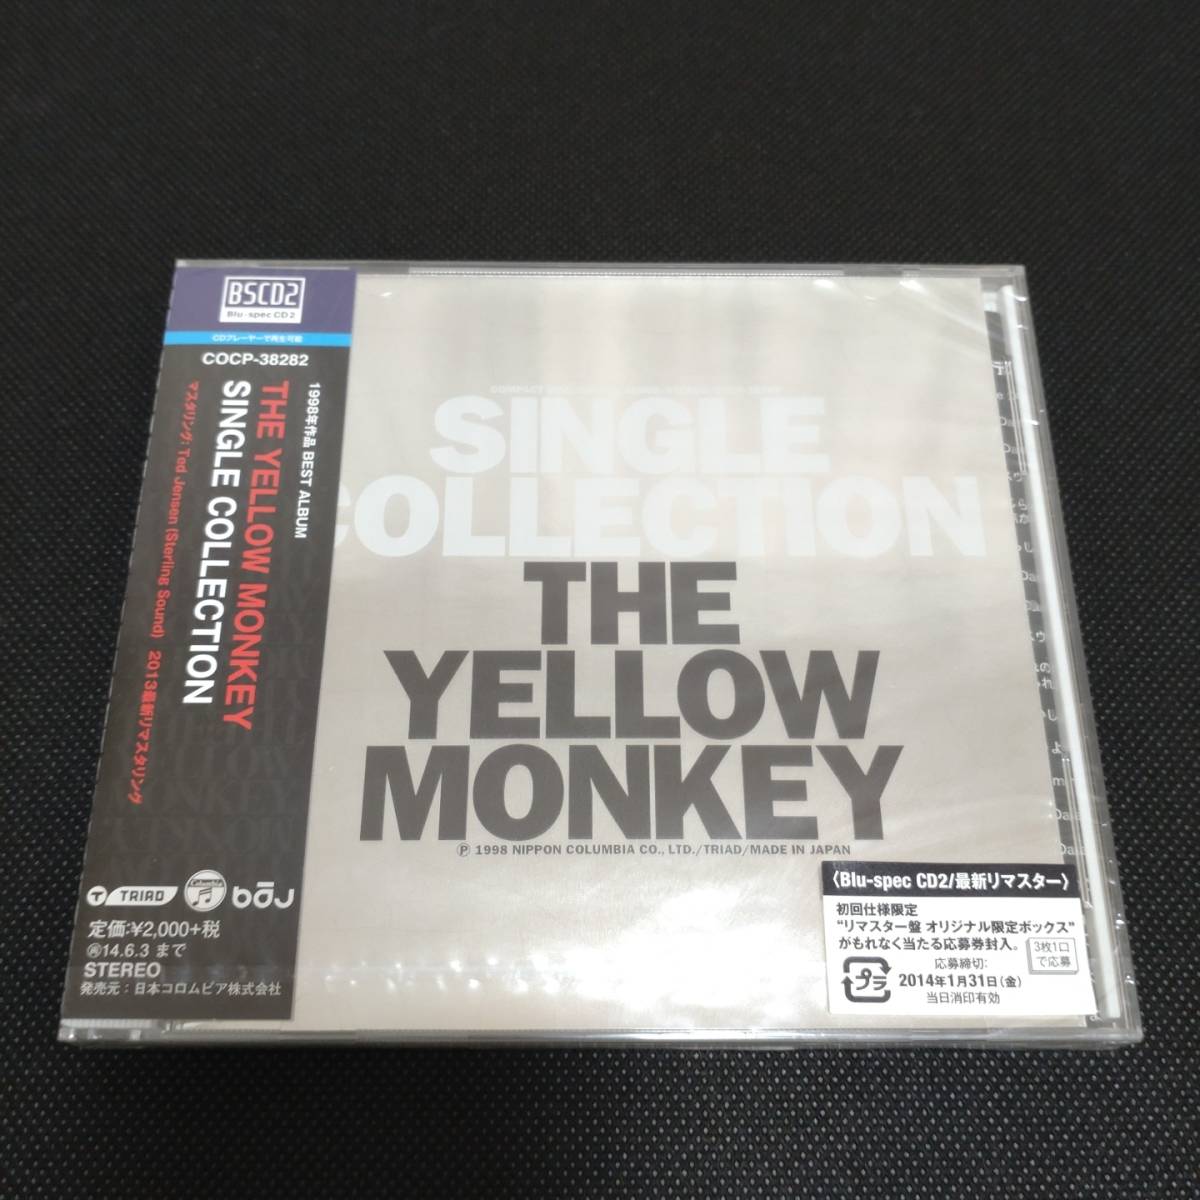 THE YELLOW MONKEY / シングル・コレクション【Blu-spec CD2】 (未開封